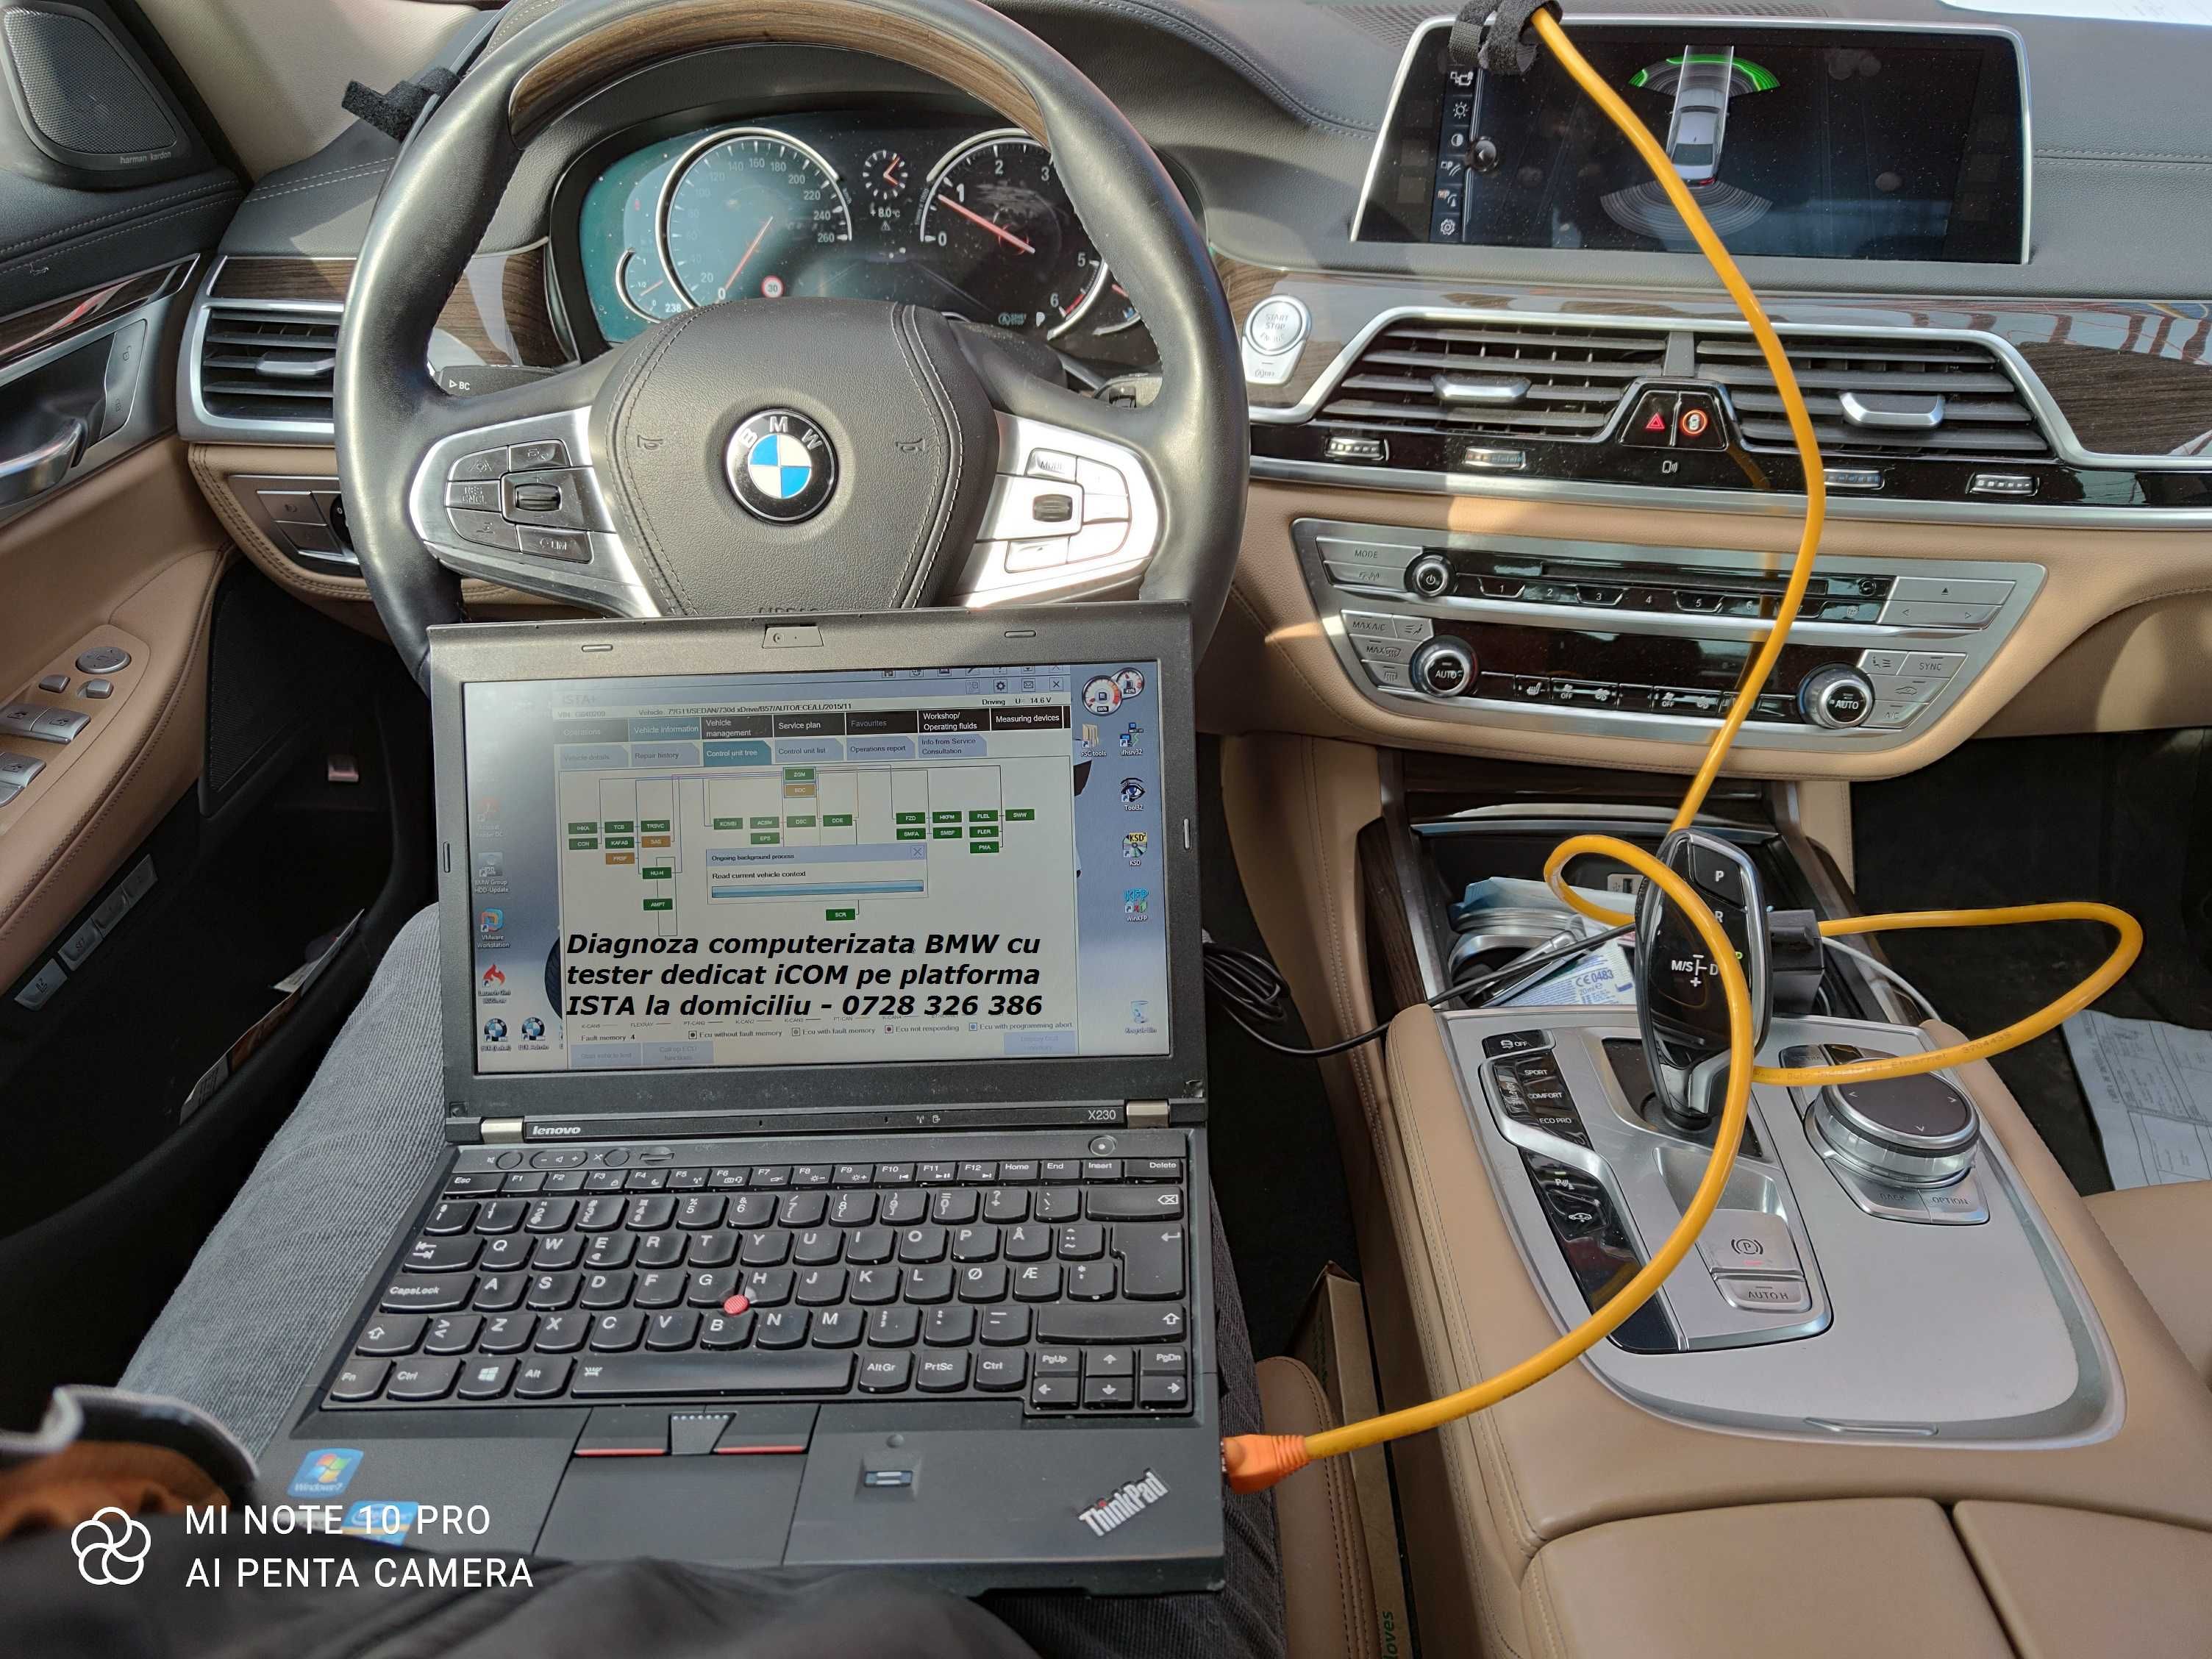 Anulare blocator volan BMW deblocare coloana directie resetare ELV